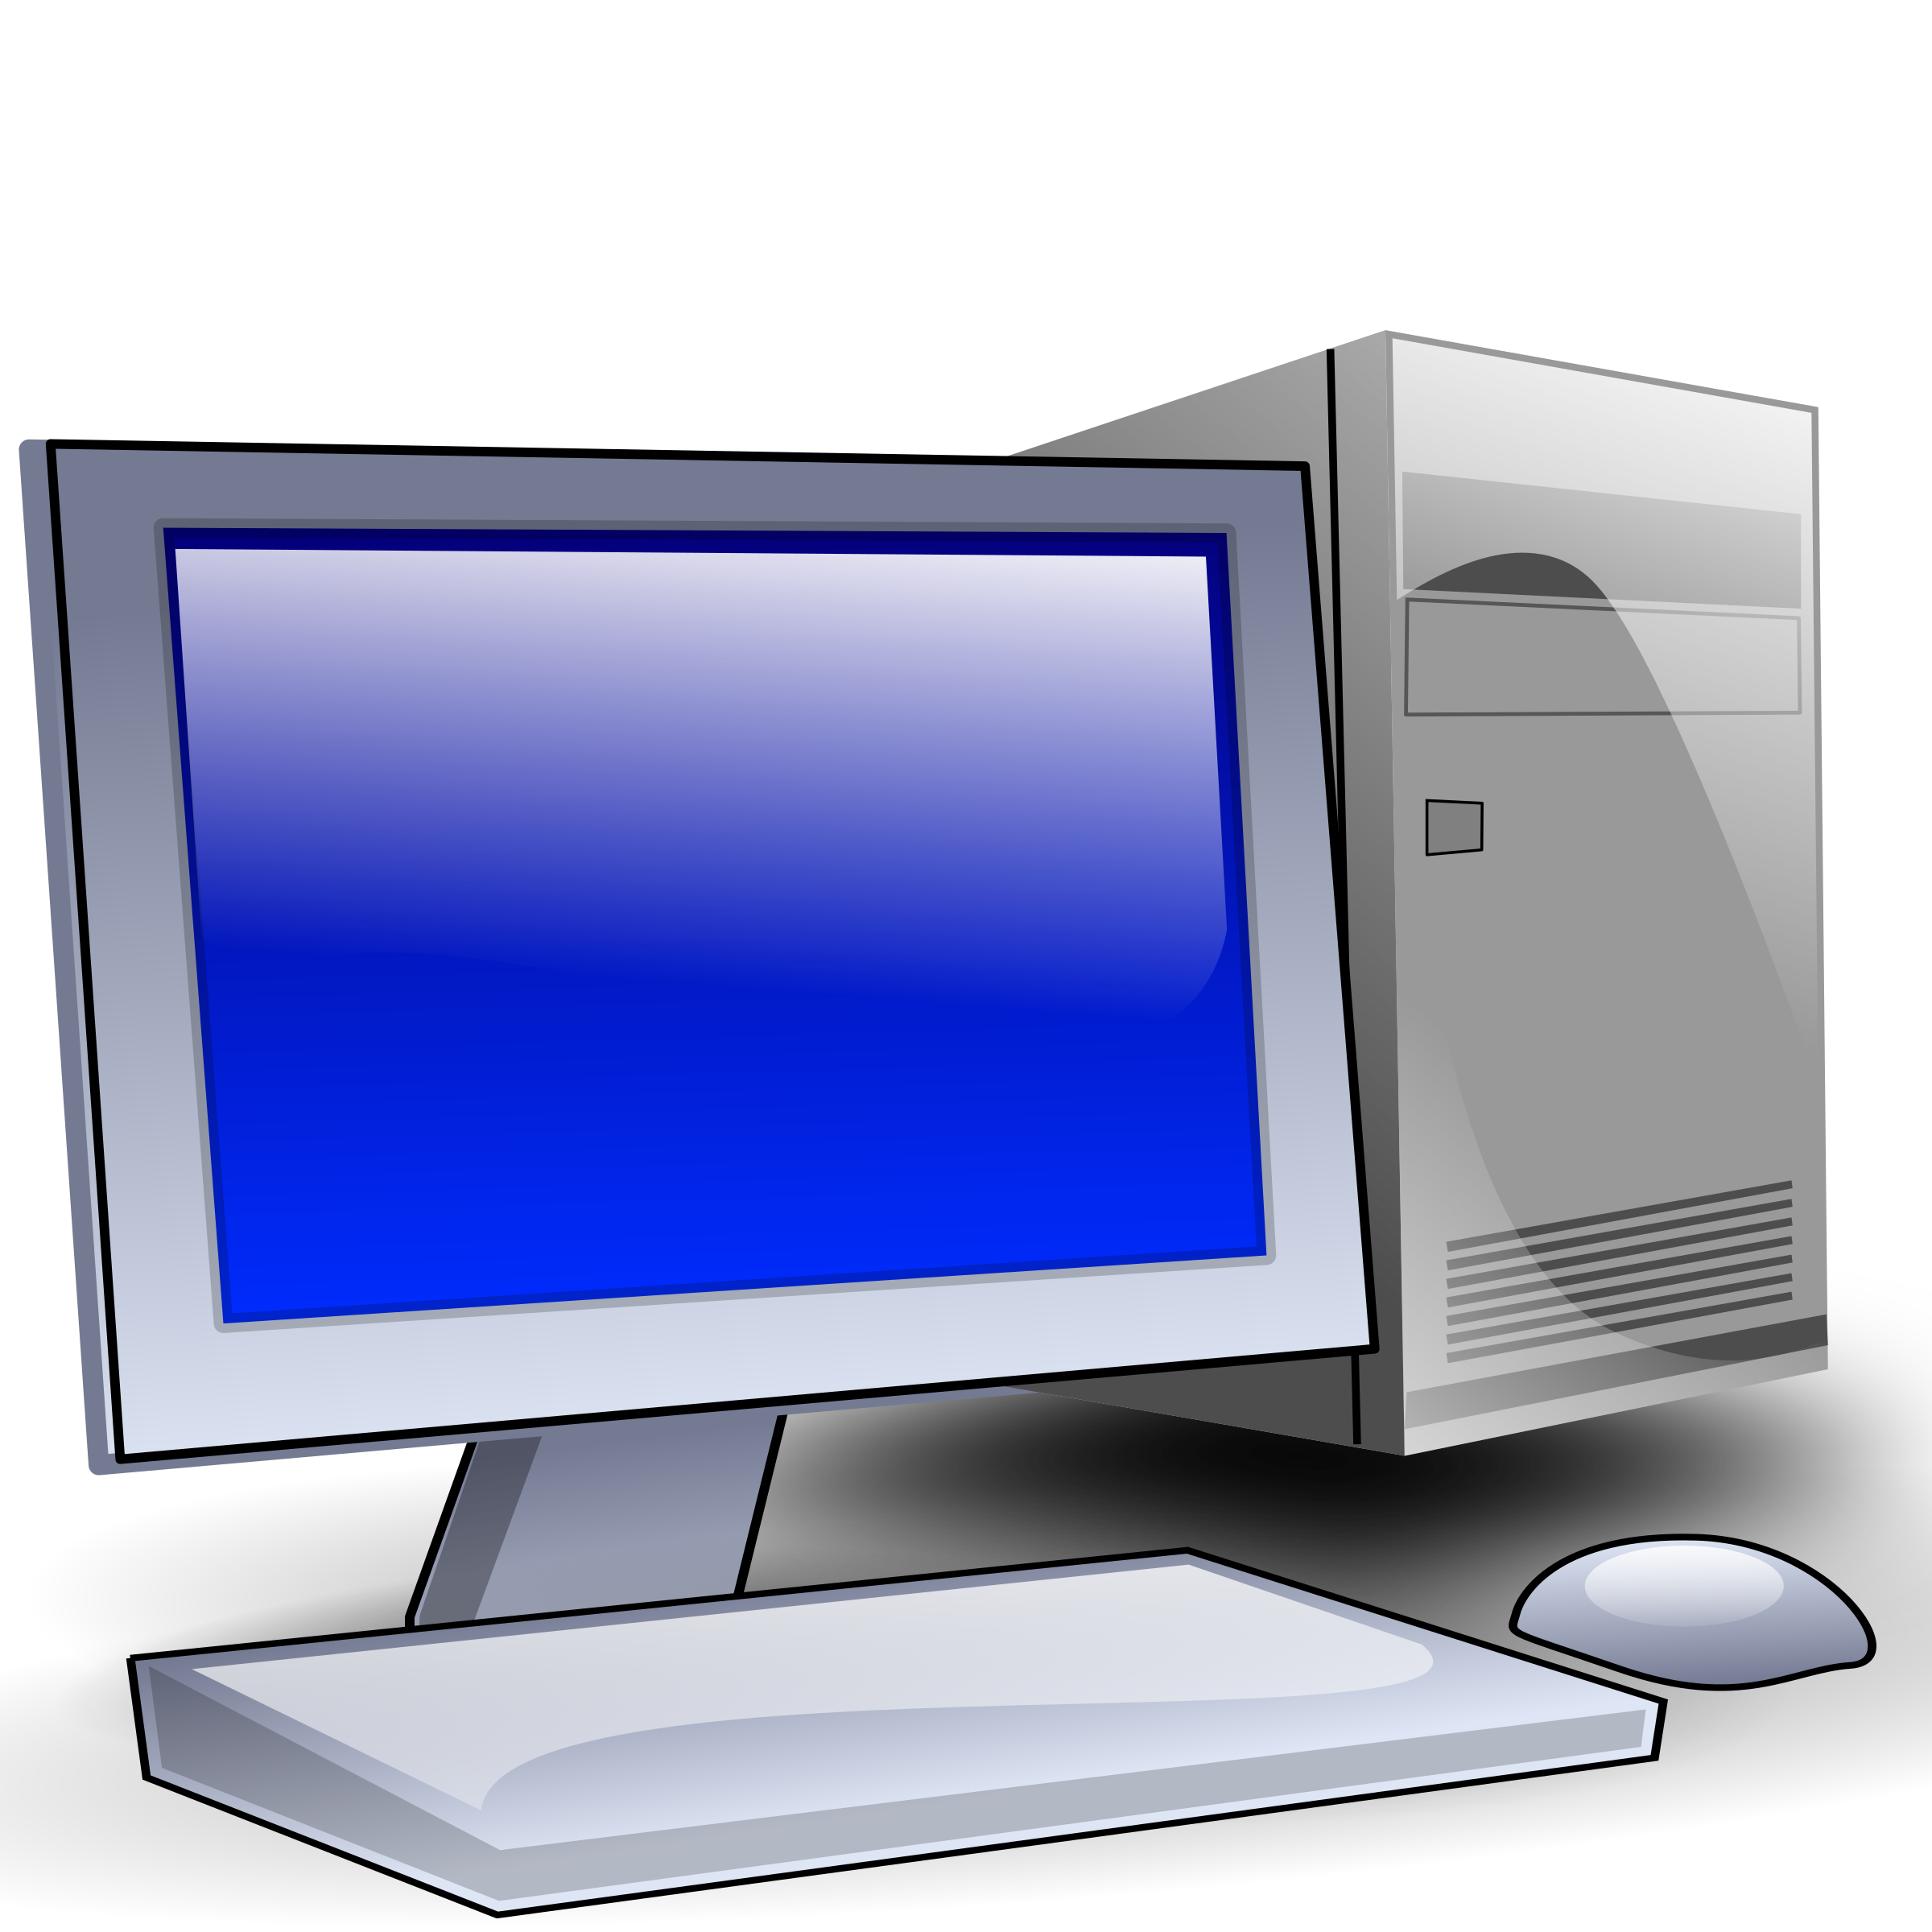 Pc clipart desktop, Pc desktop Transparent FREE for download on